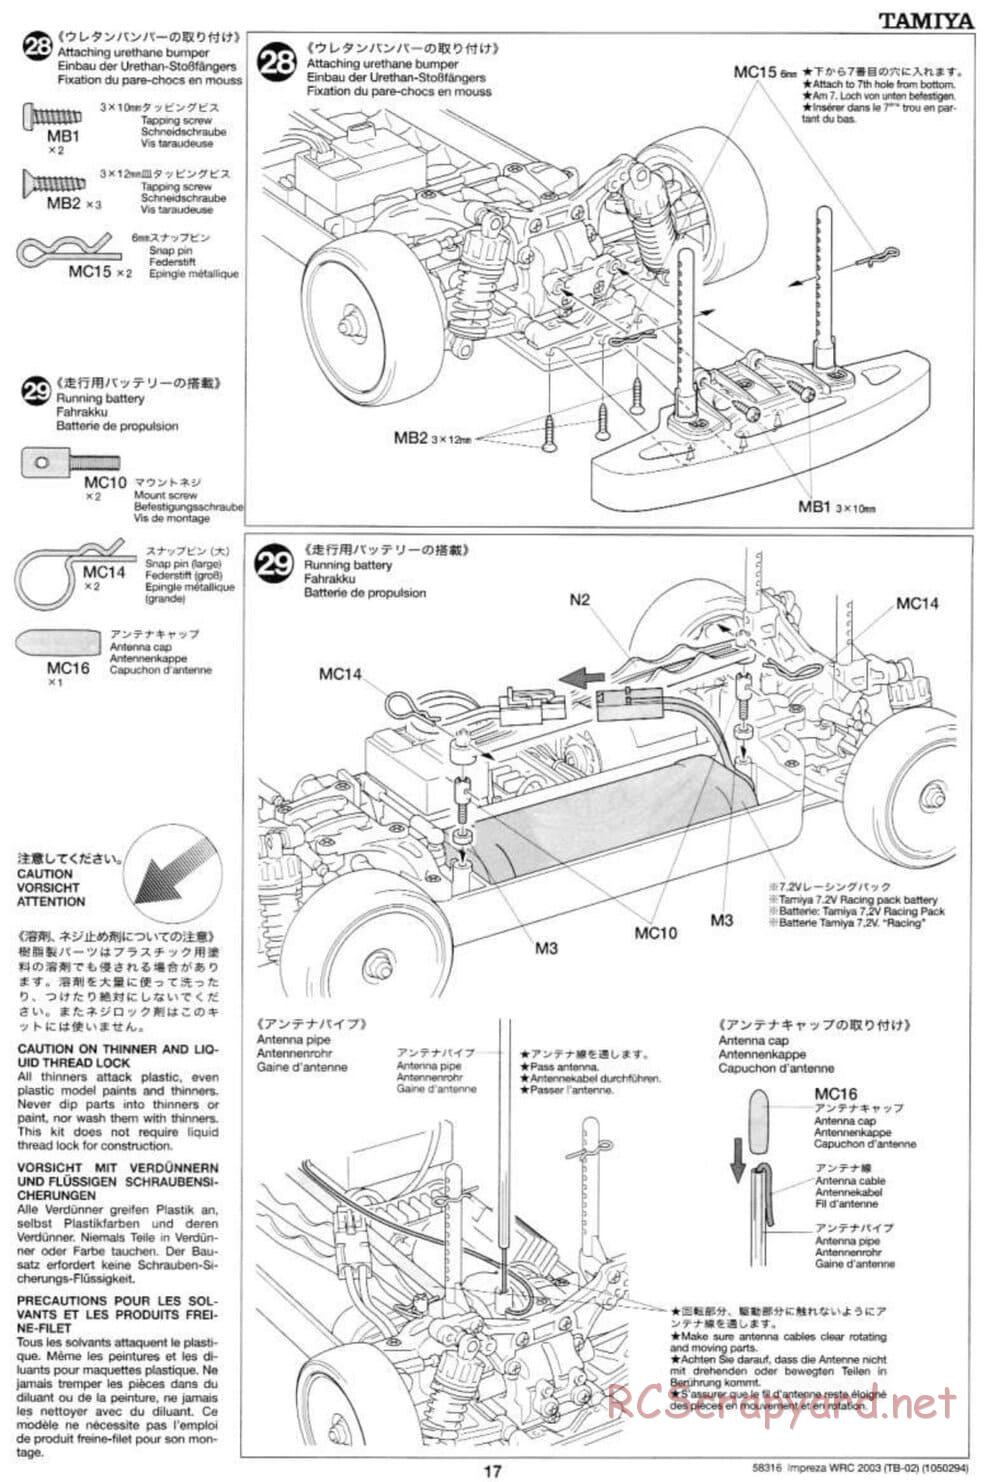 Tamiya - Subaru Impreza WRC 2003 - TB-02 Chassis - Manual - Page 17